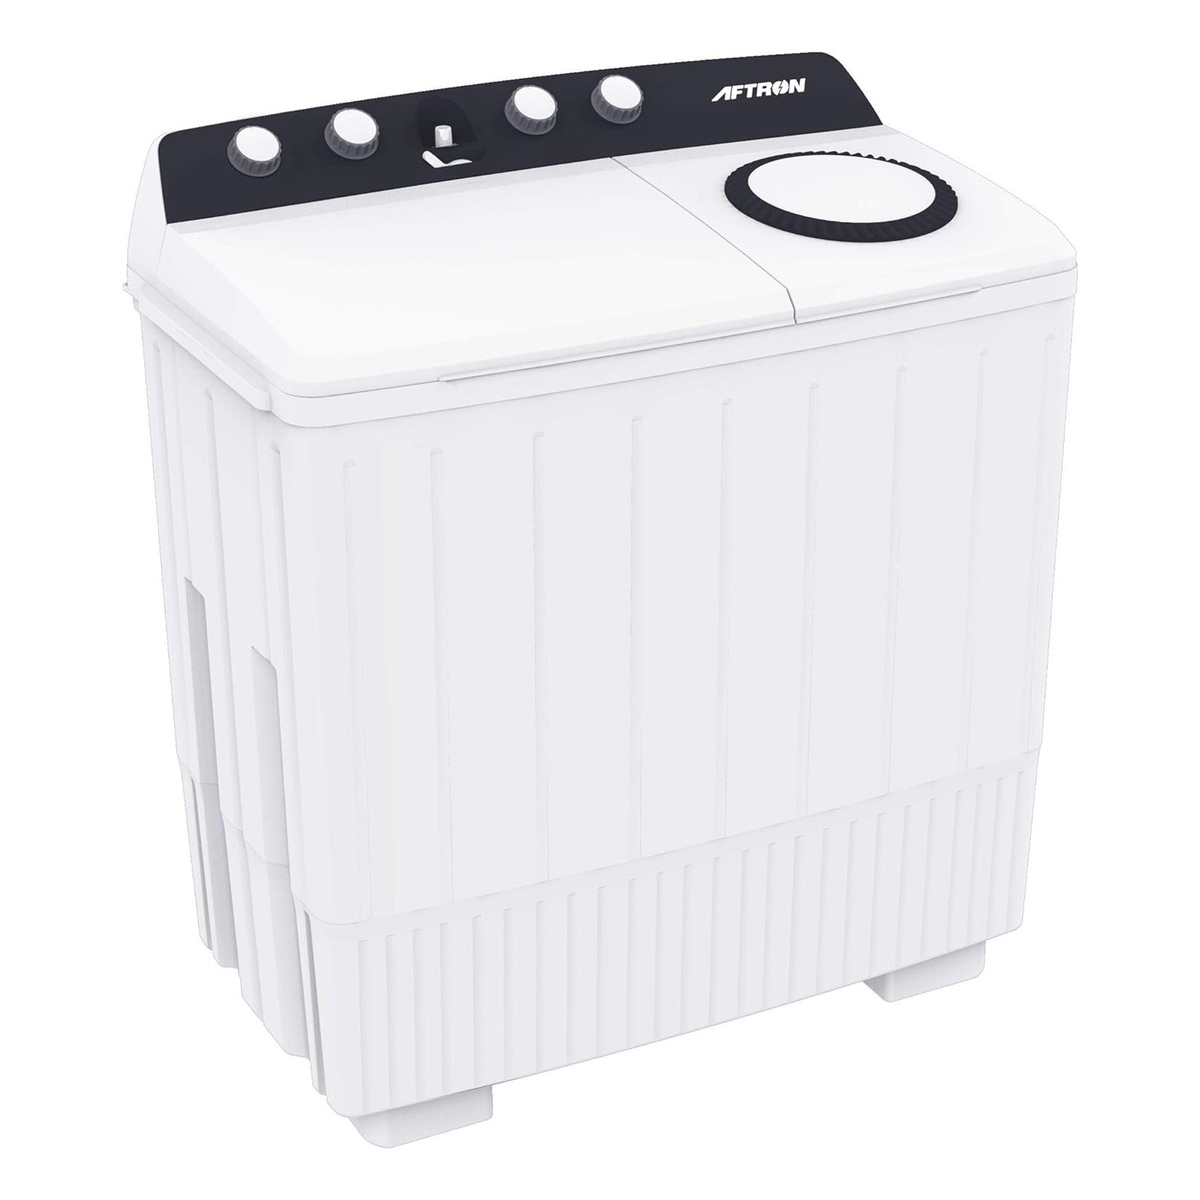 Aftron Top Load Semi Automatic Twin Tub Washing Machine, 12 kg, White, AFW12600X